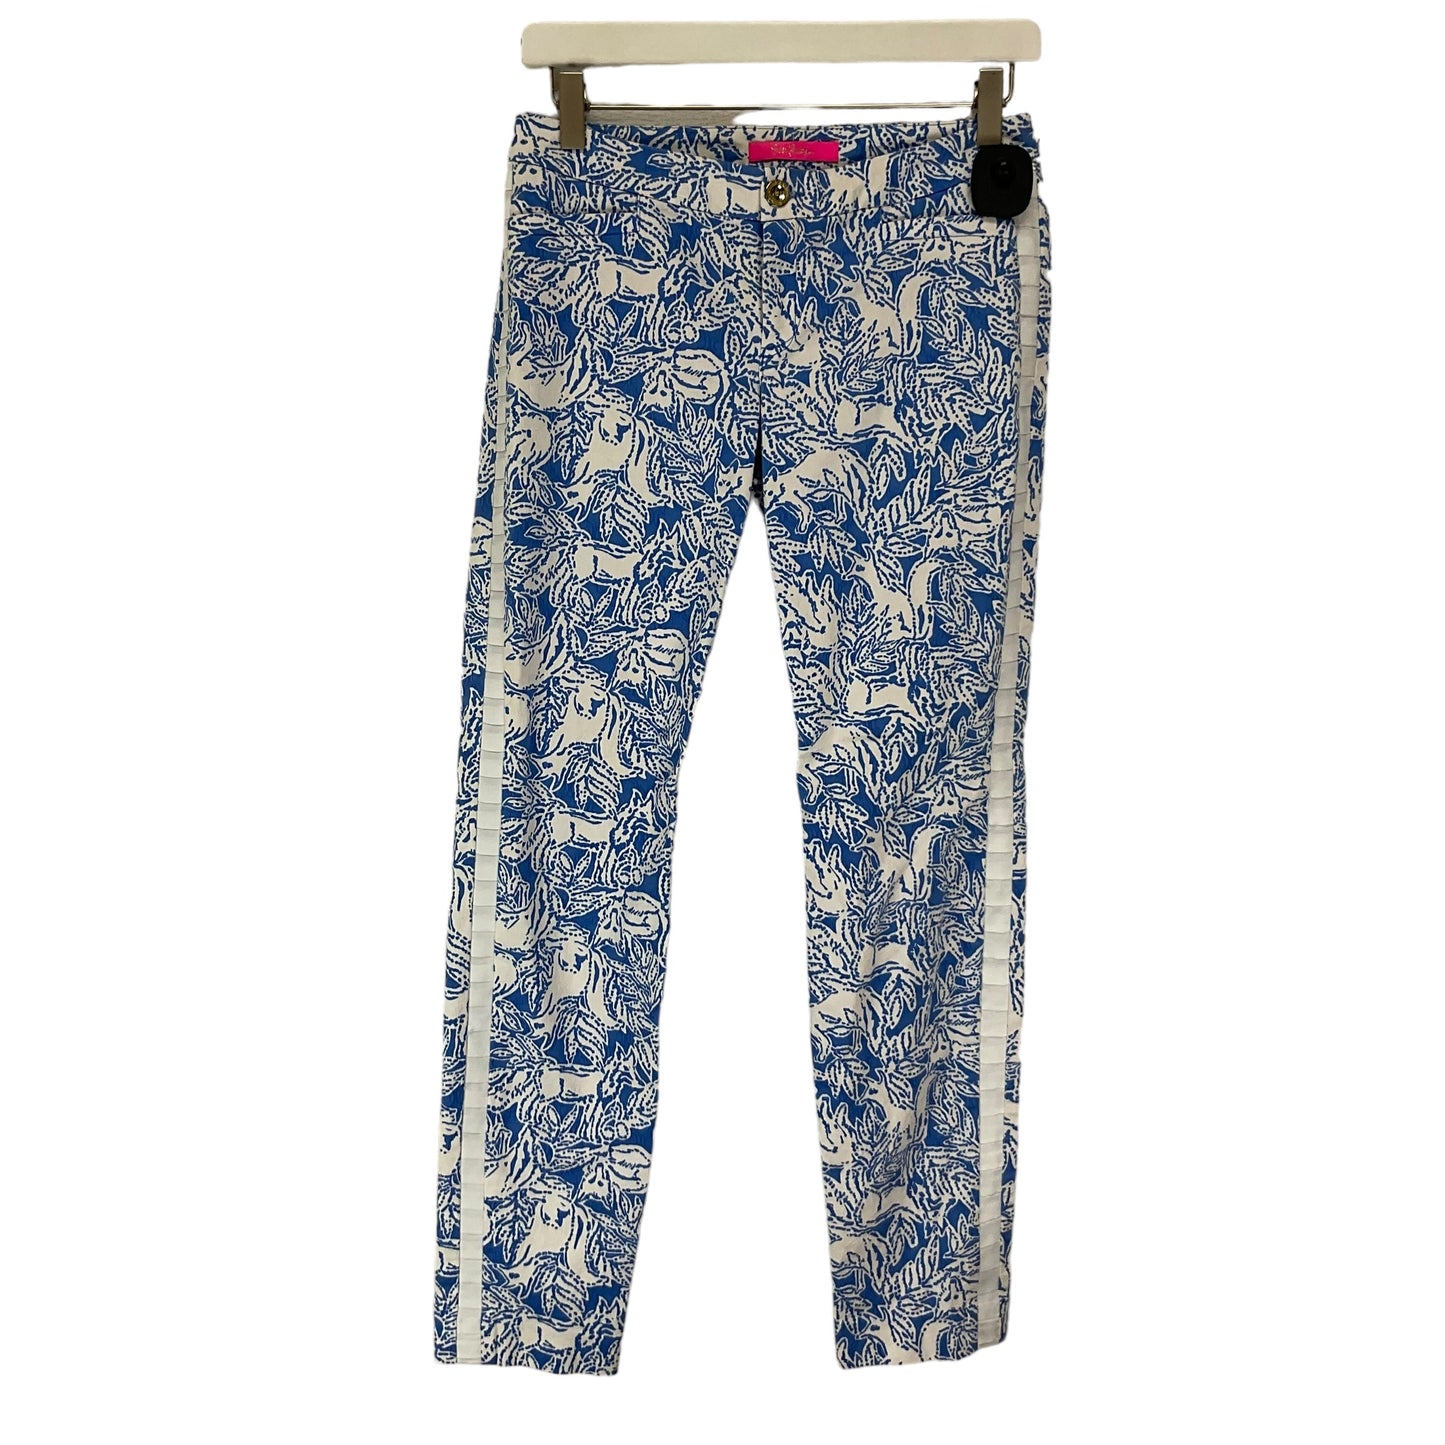 Blue & White Pants Designer Lilly Pulitzer, Size 2